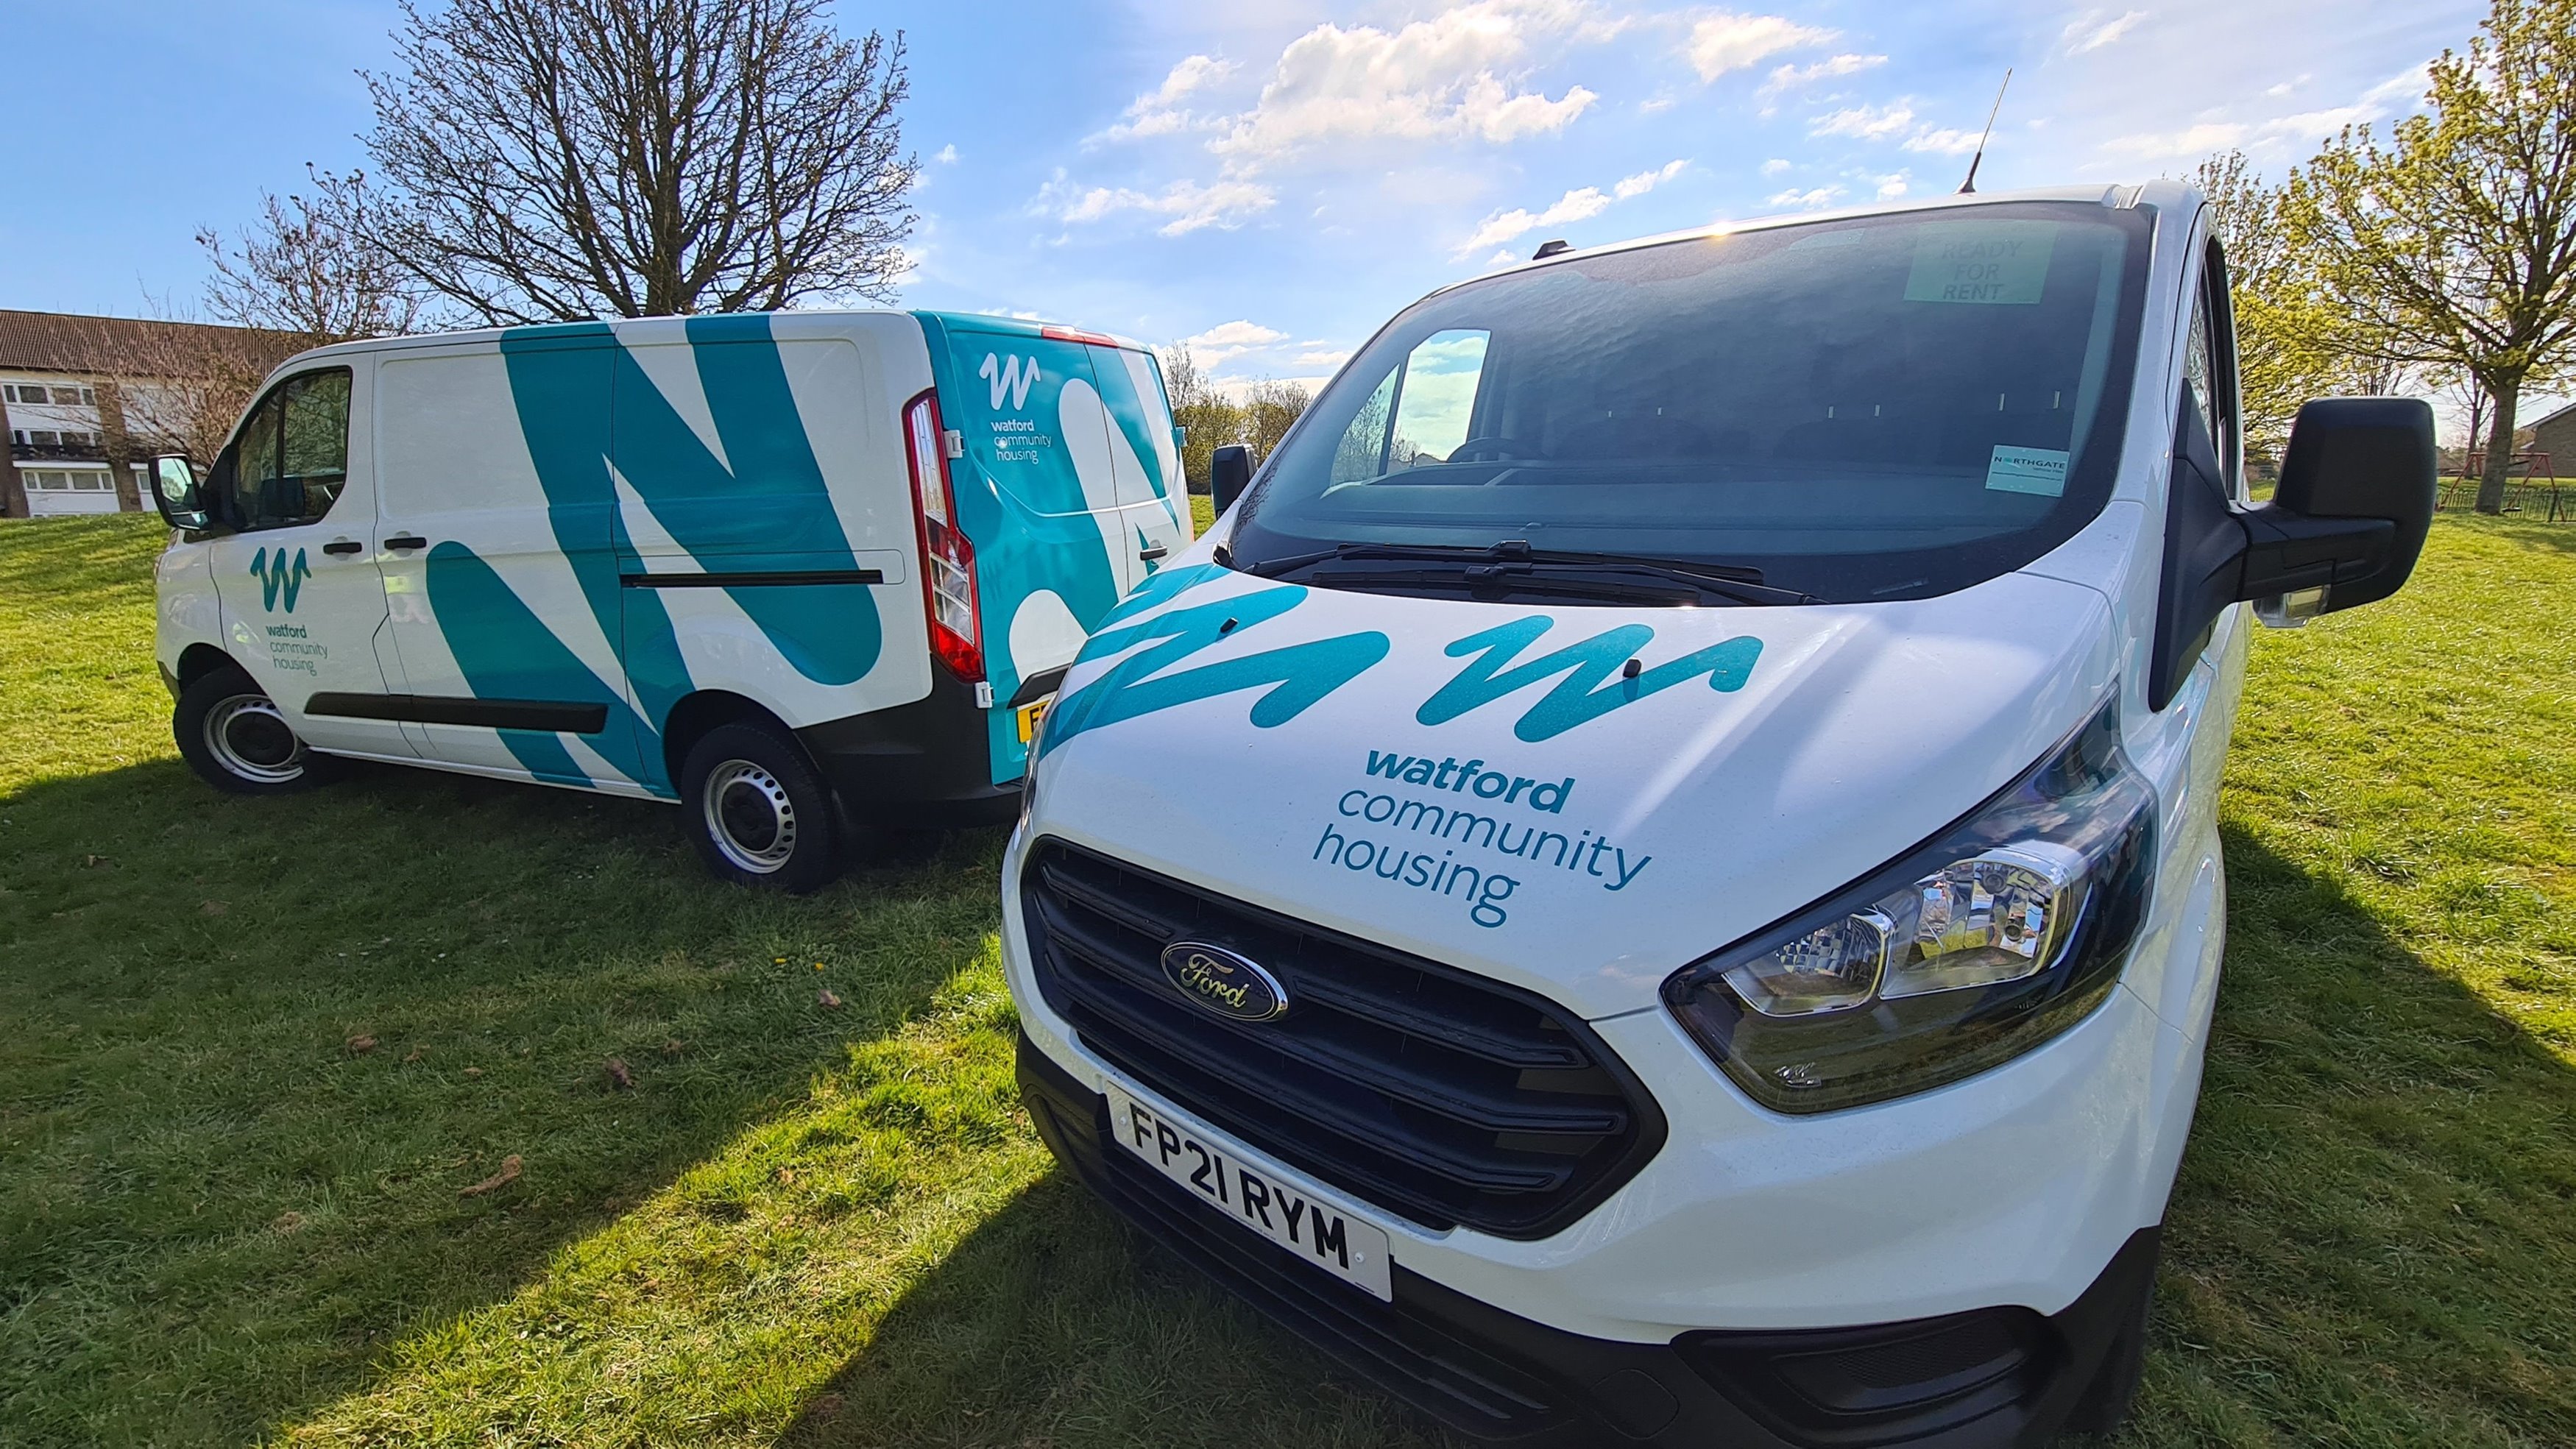 New vans for our Mobile Estates Officers!